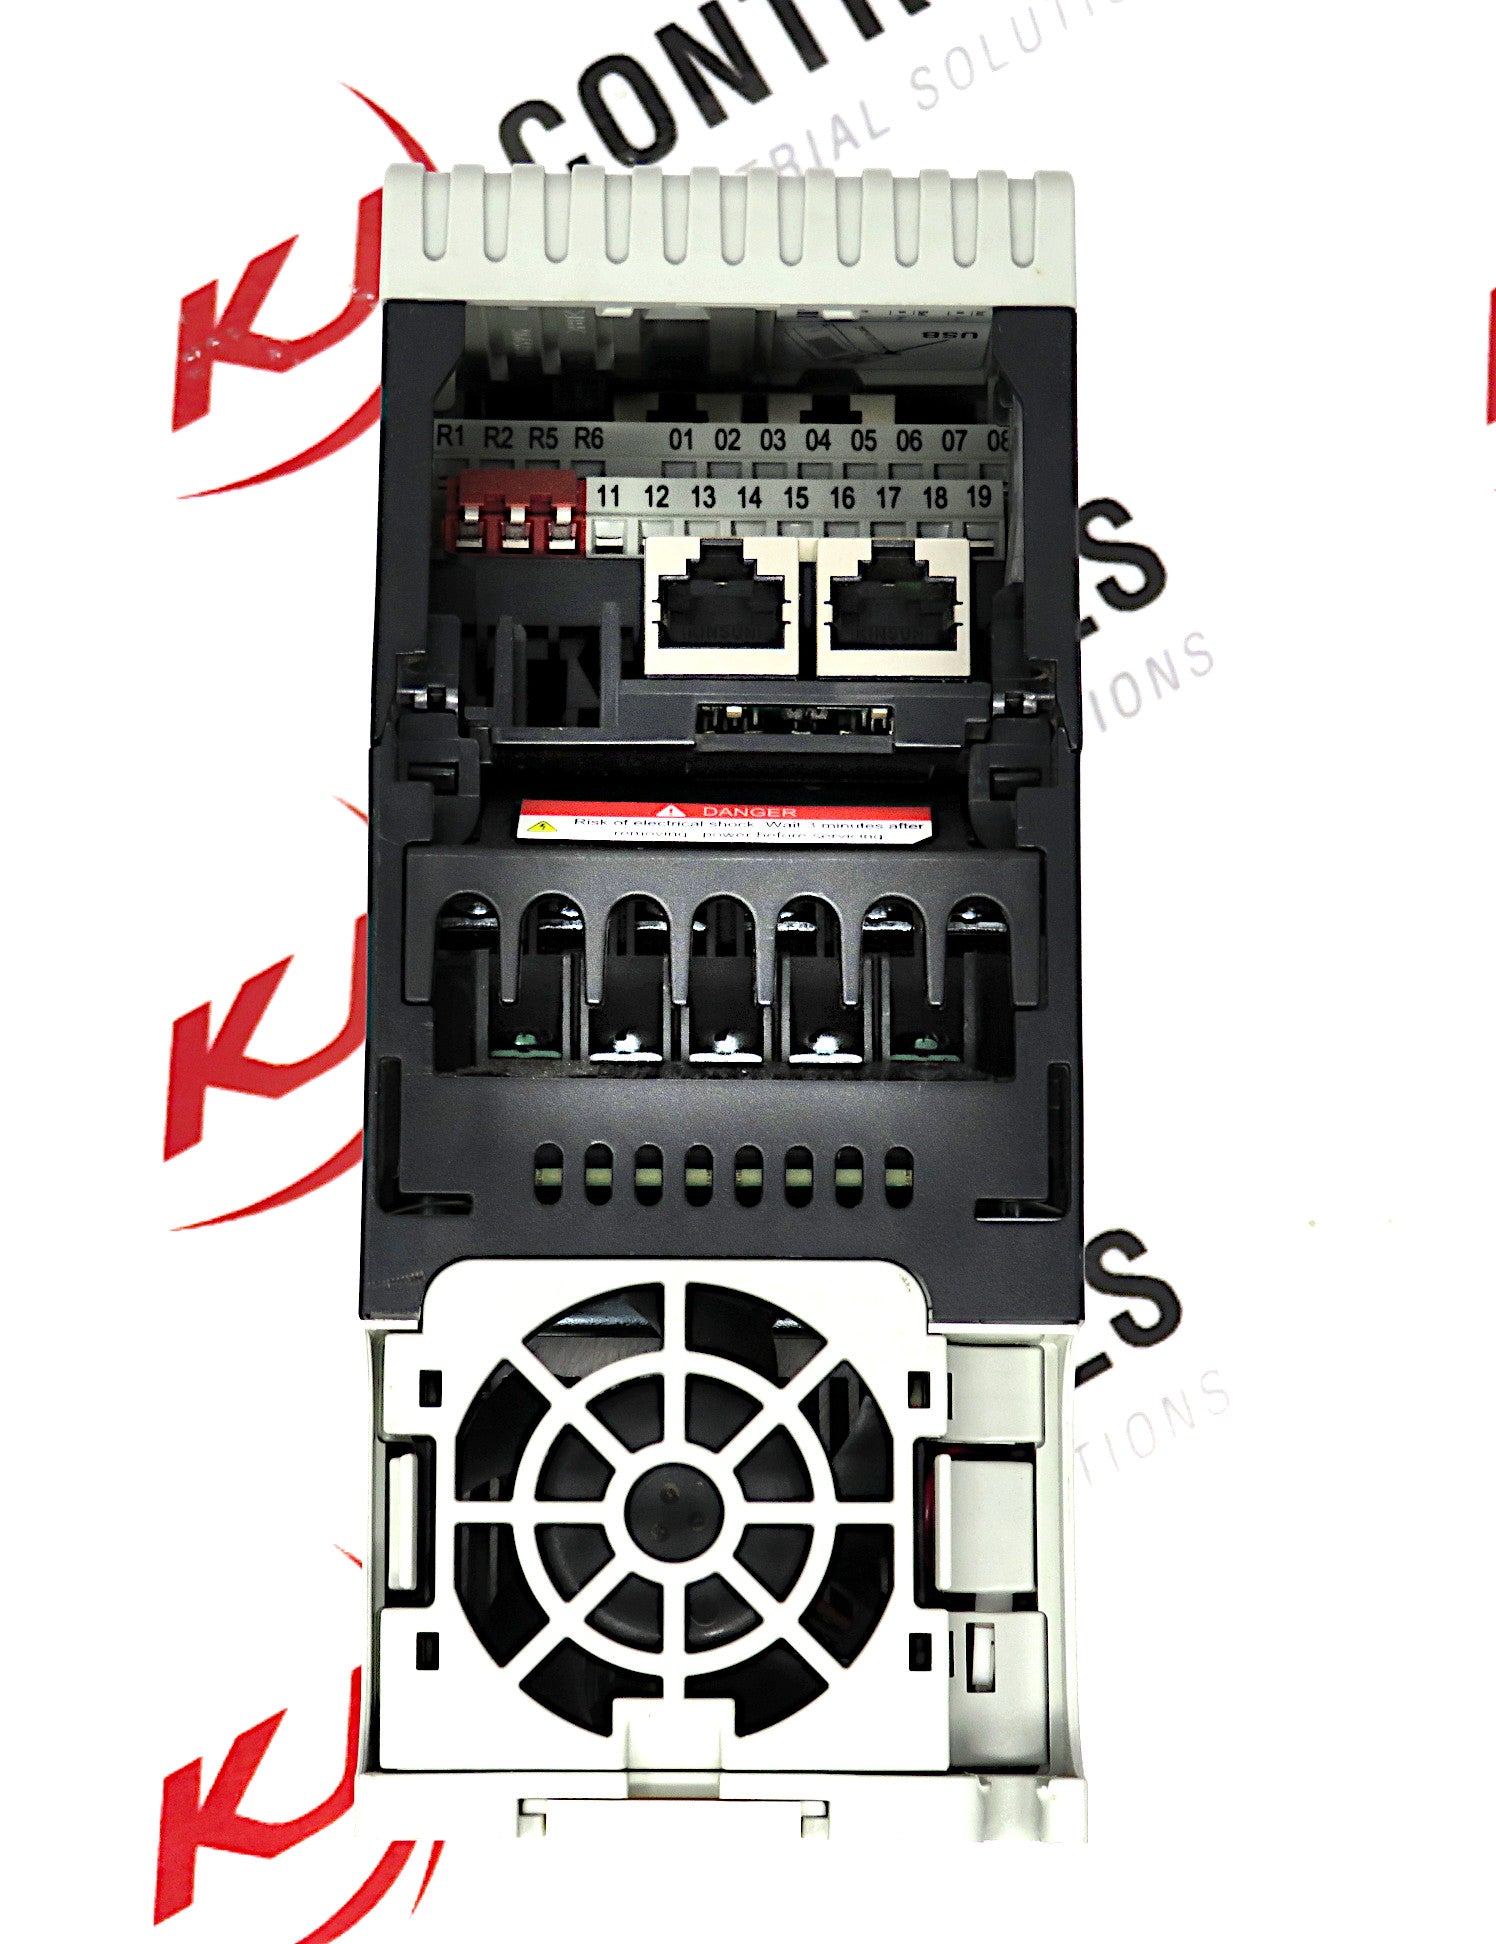 Allen-Bradley PowerFlex 525 AC Drive 25B-E3P0N104 AC Drive 600 VAC 1.5KW/2.0 HP